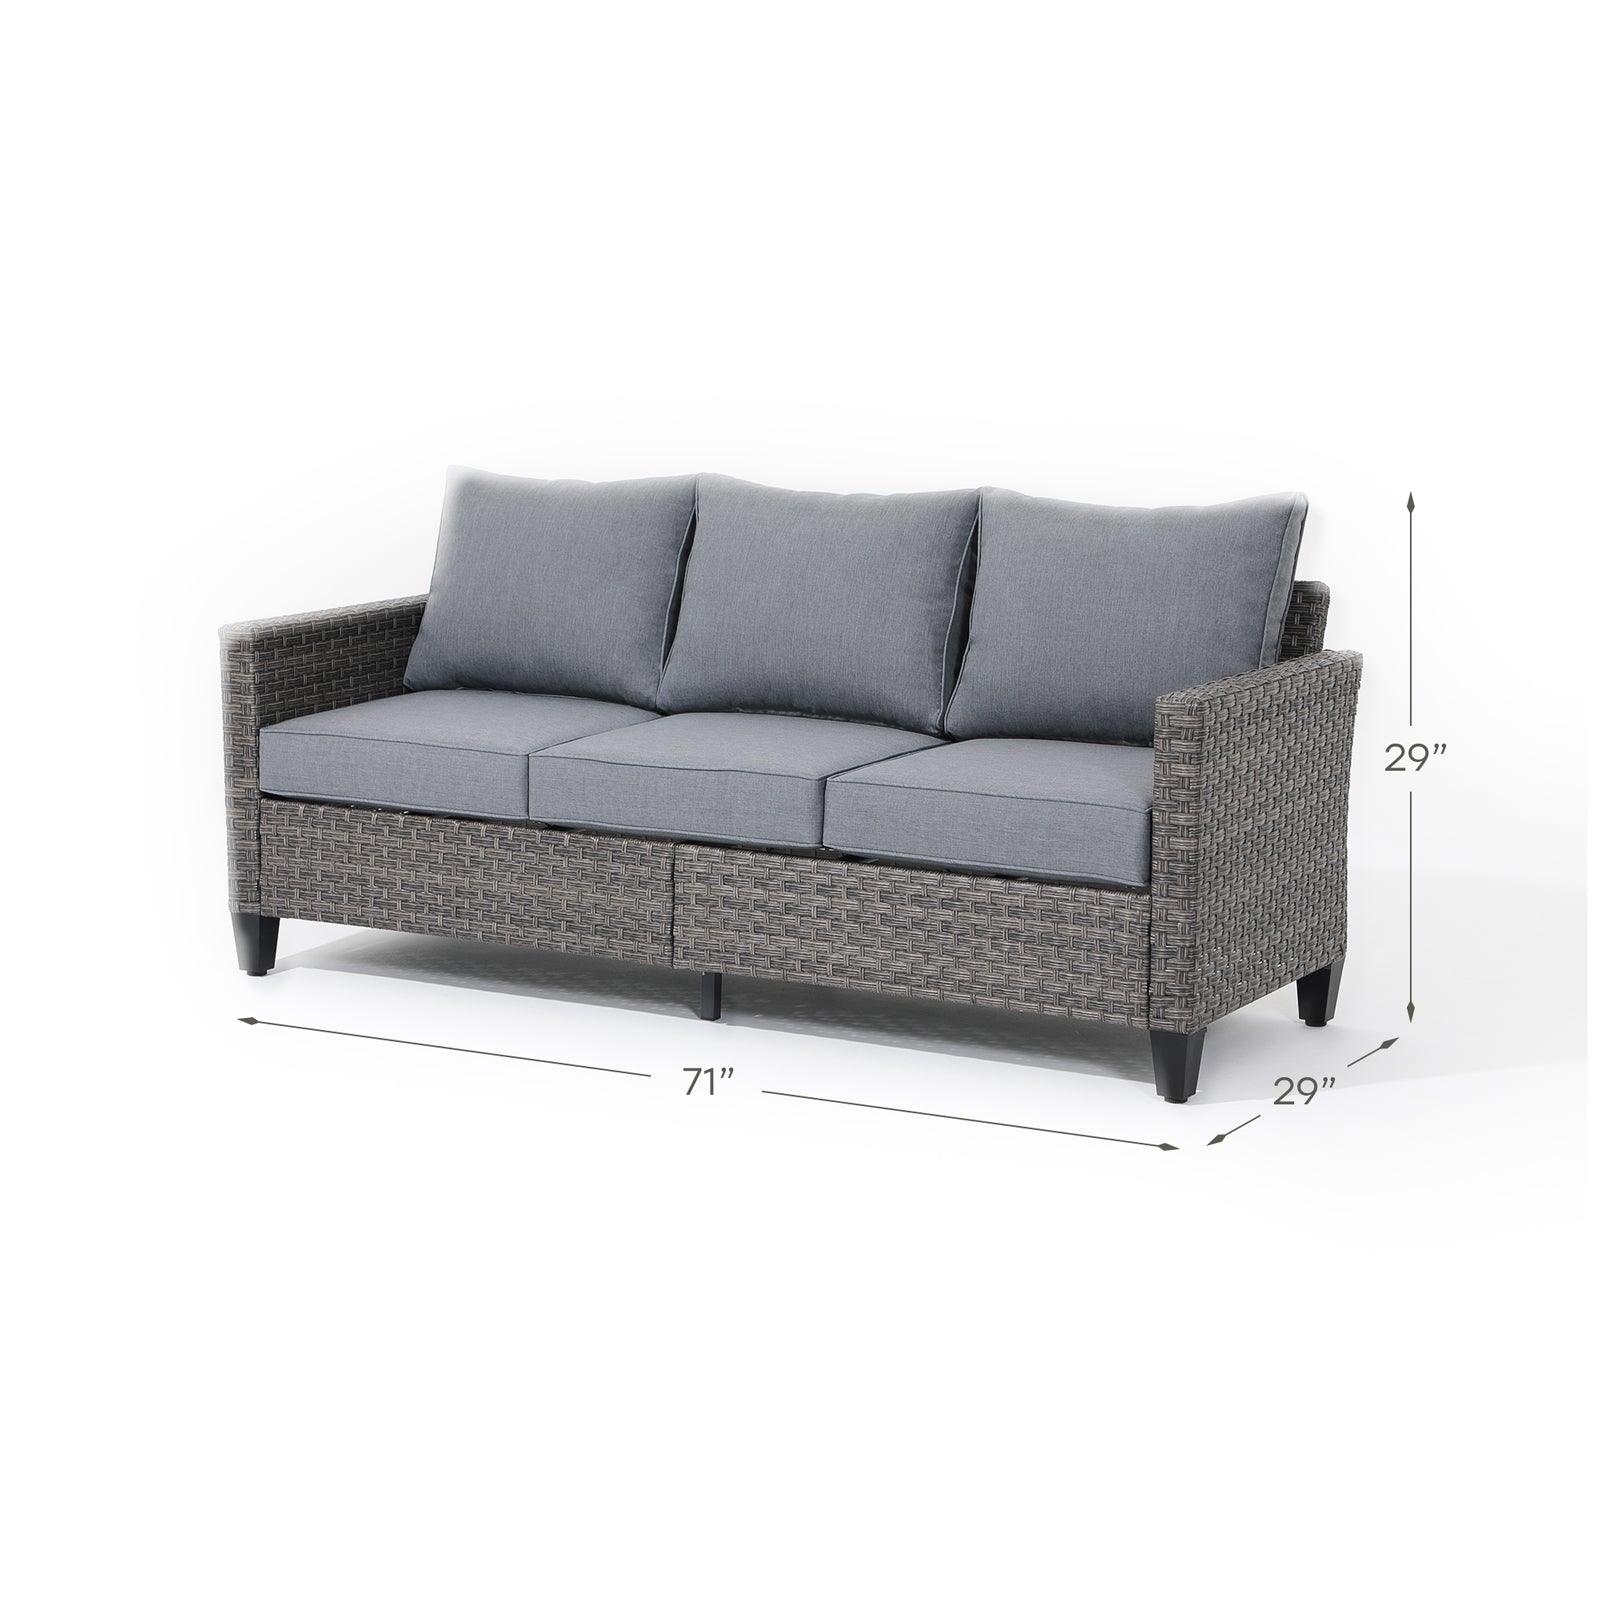 Ayia grey 3-seater sofa with rattan design, grey cushions, dimension information  - Jardina Furniture #color_Grey